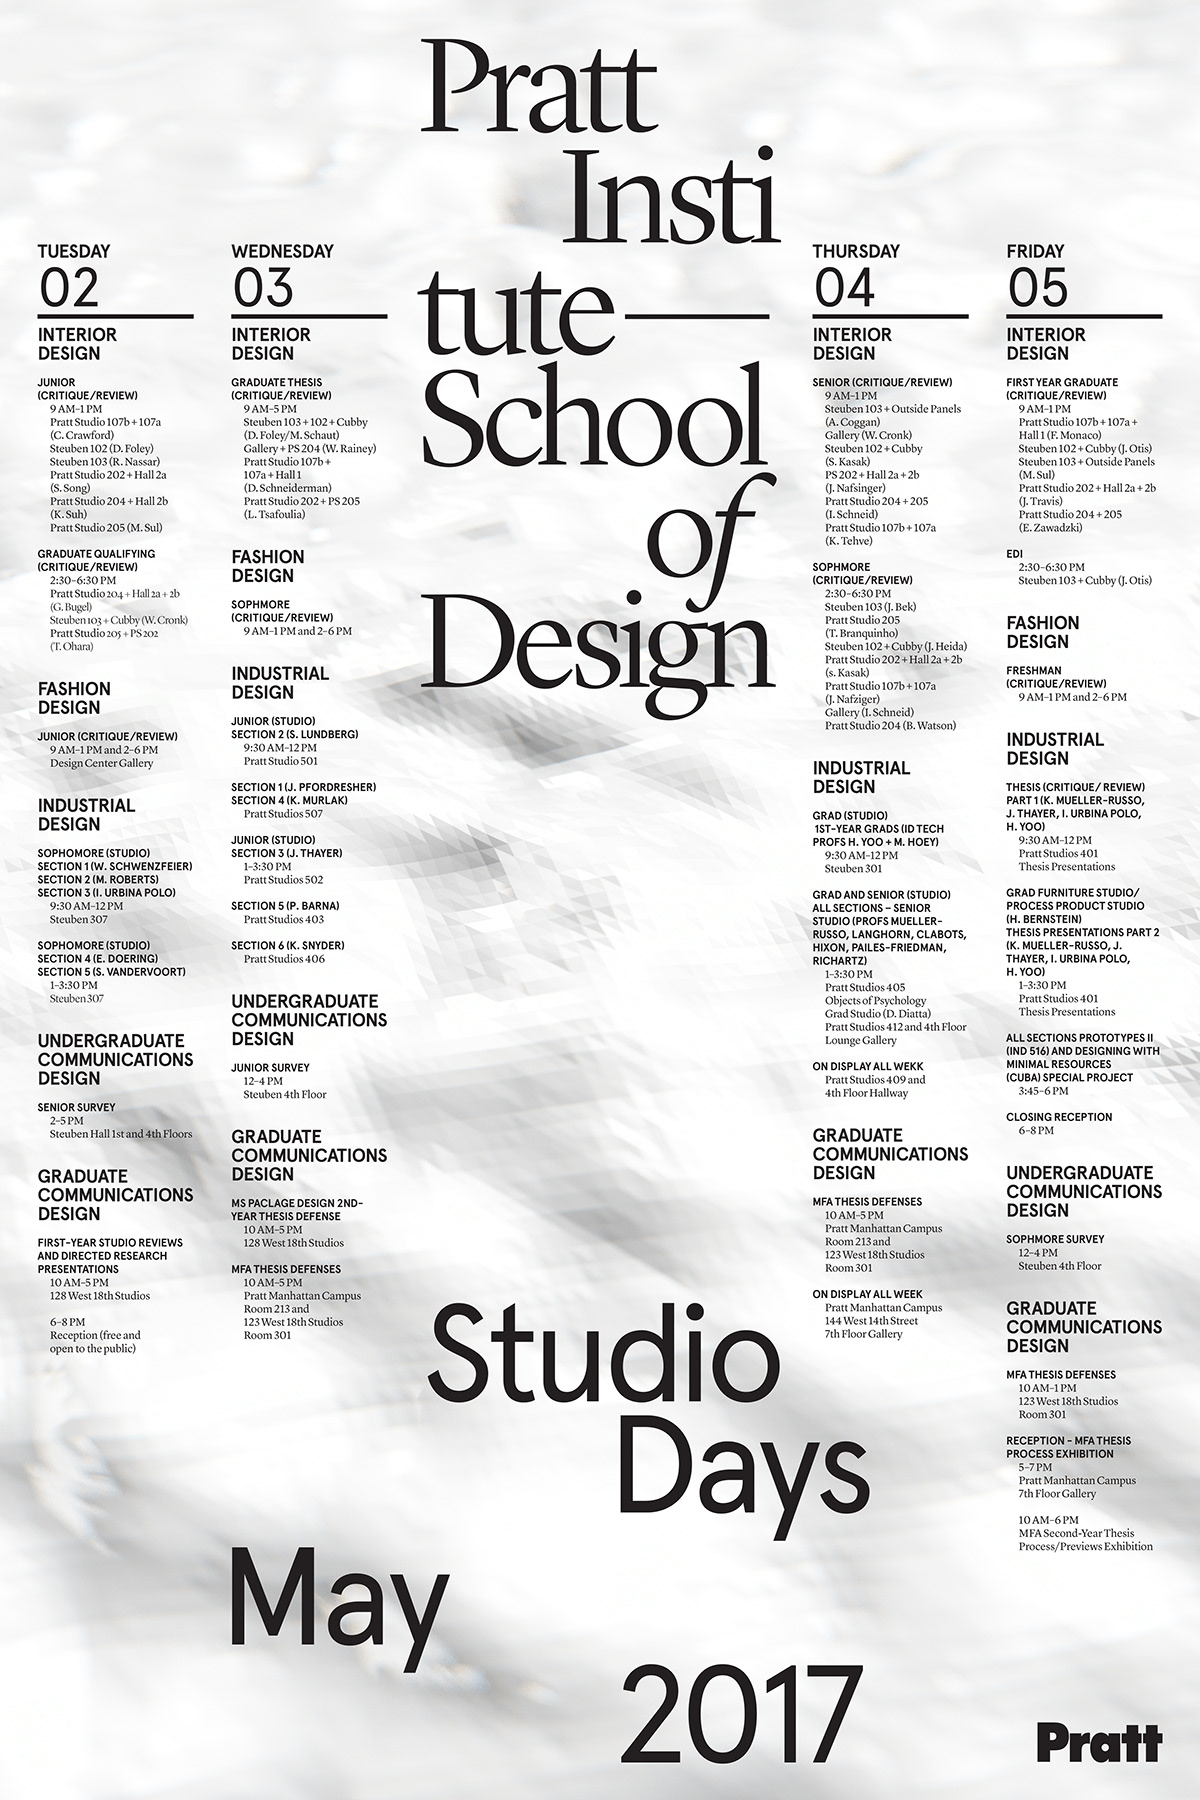 pratt Pratt Institute Poster Design brochure post card graduation